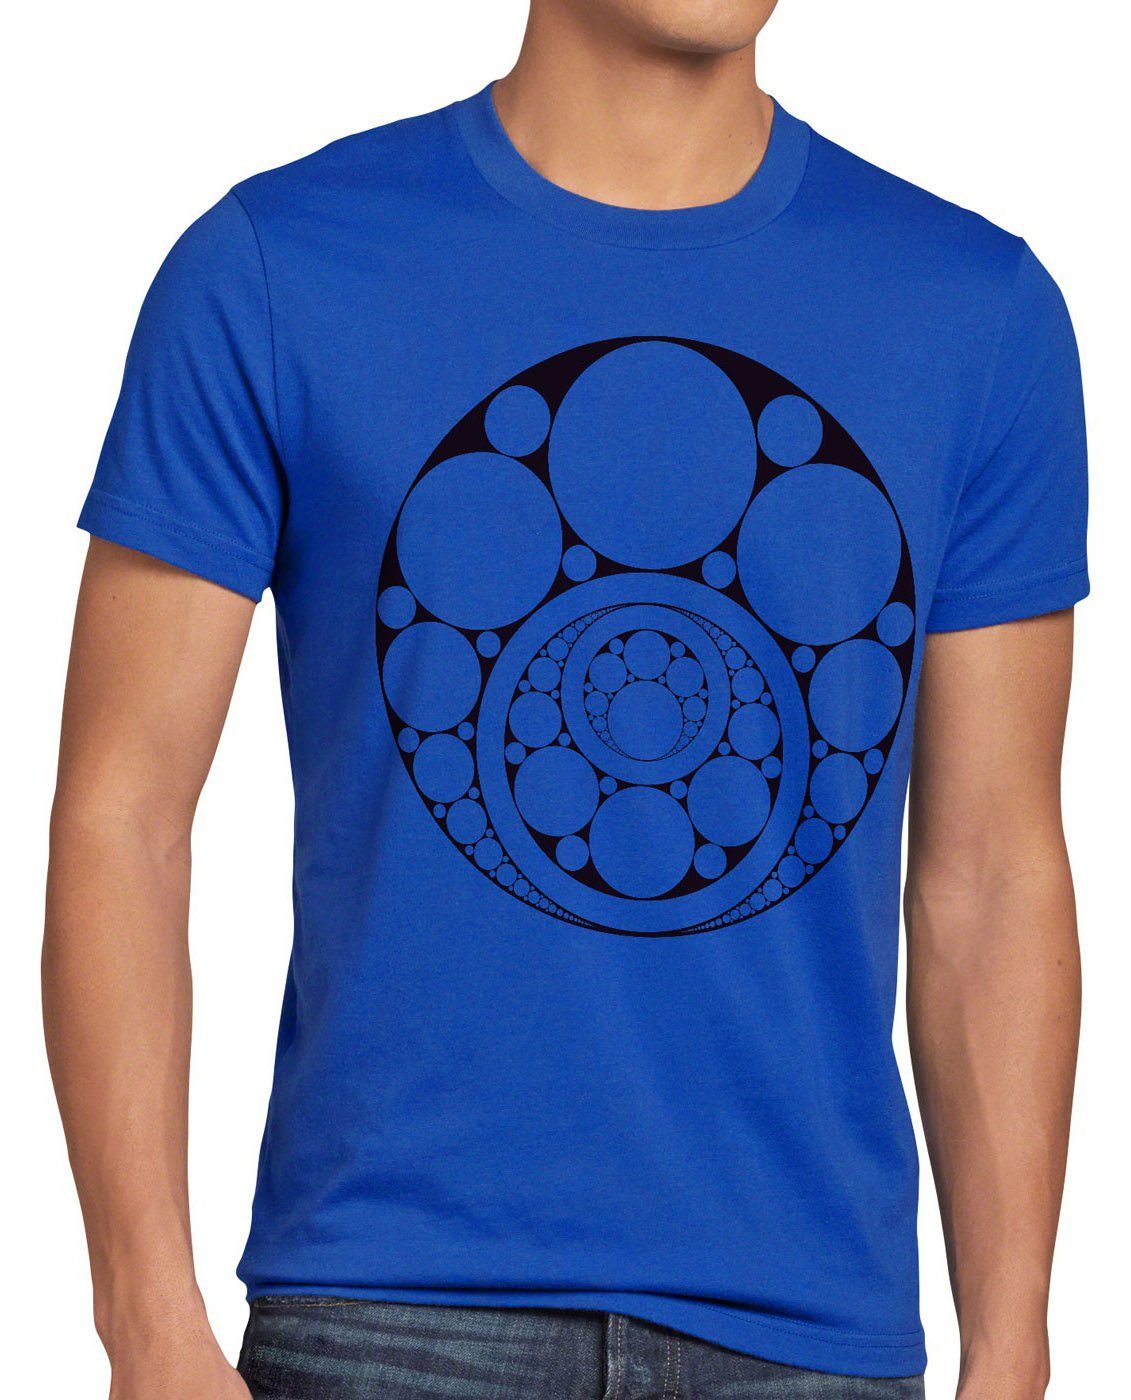 theory kreis Sheldon big bang style3 kreise Print-Shirt blau Circles physik T-Shirt Inner Herren cooper